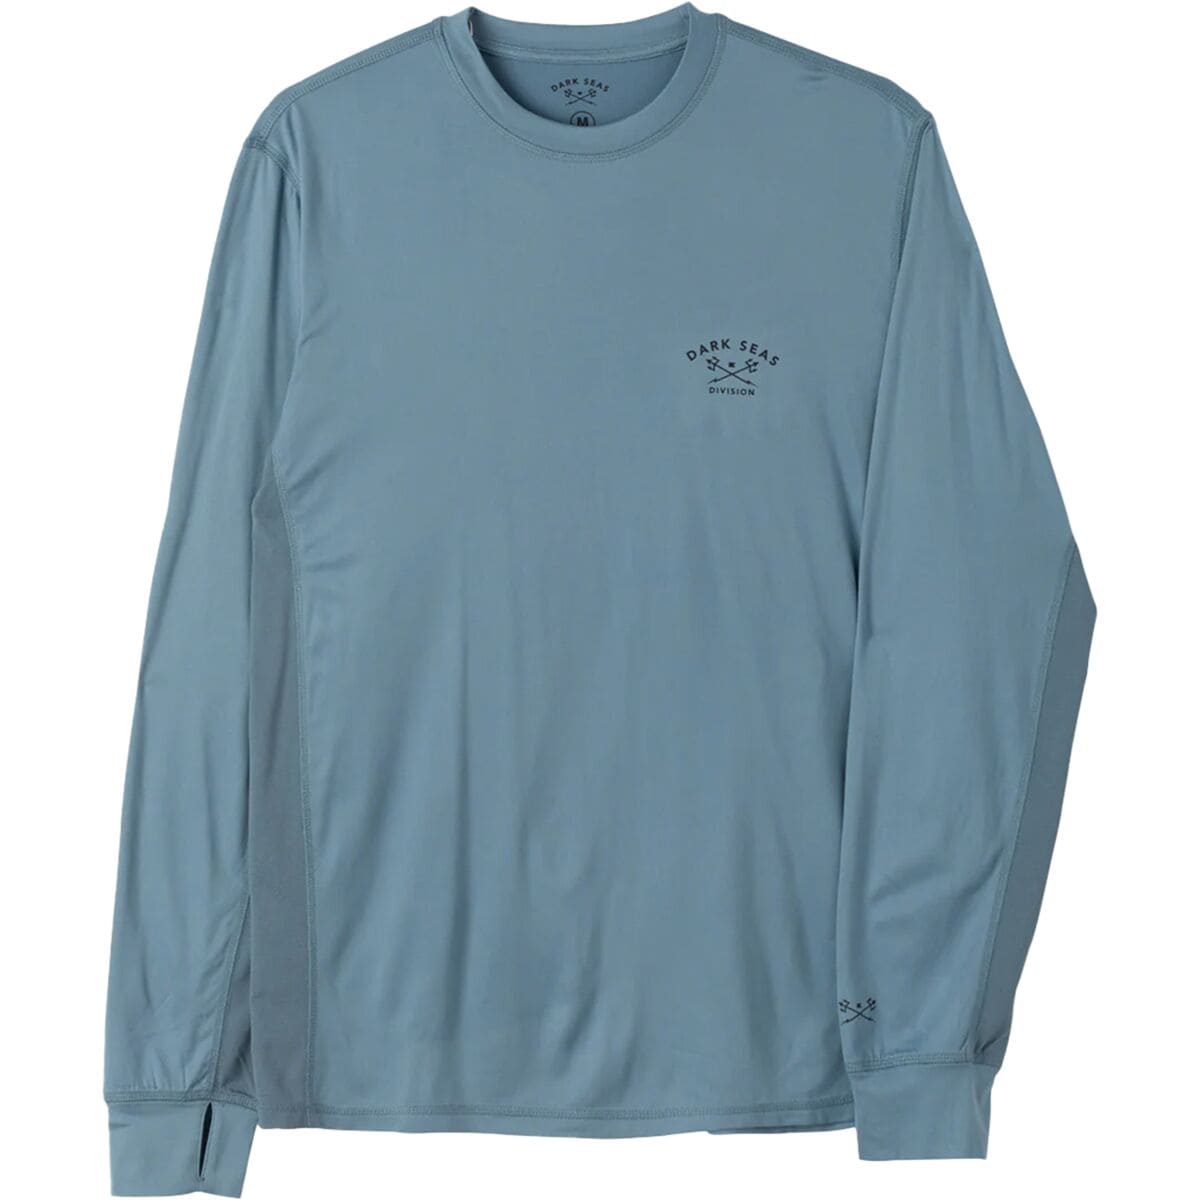 Bimini UV Long-Sleeve T-Shirt - Men